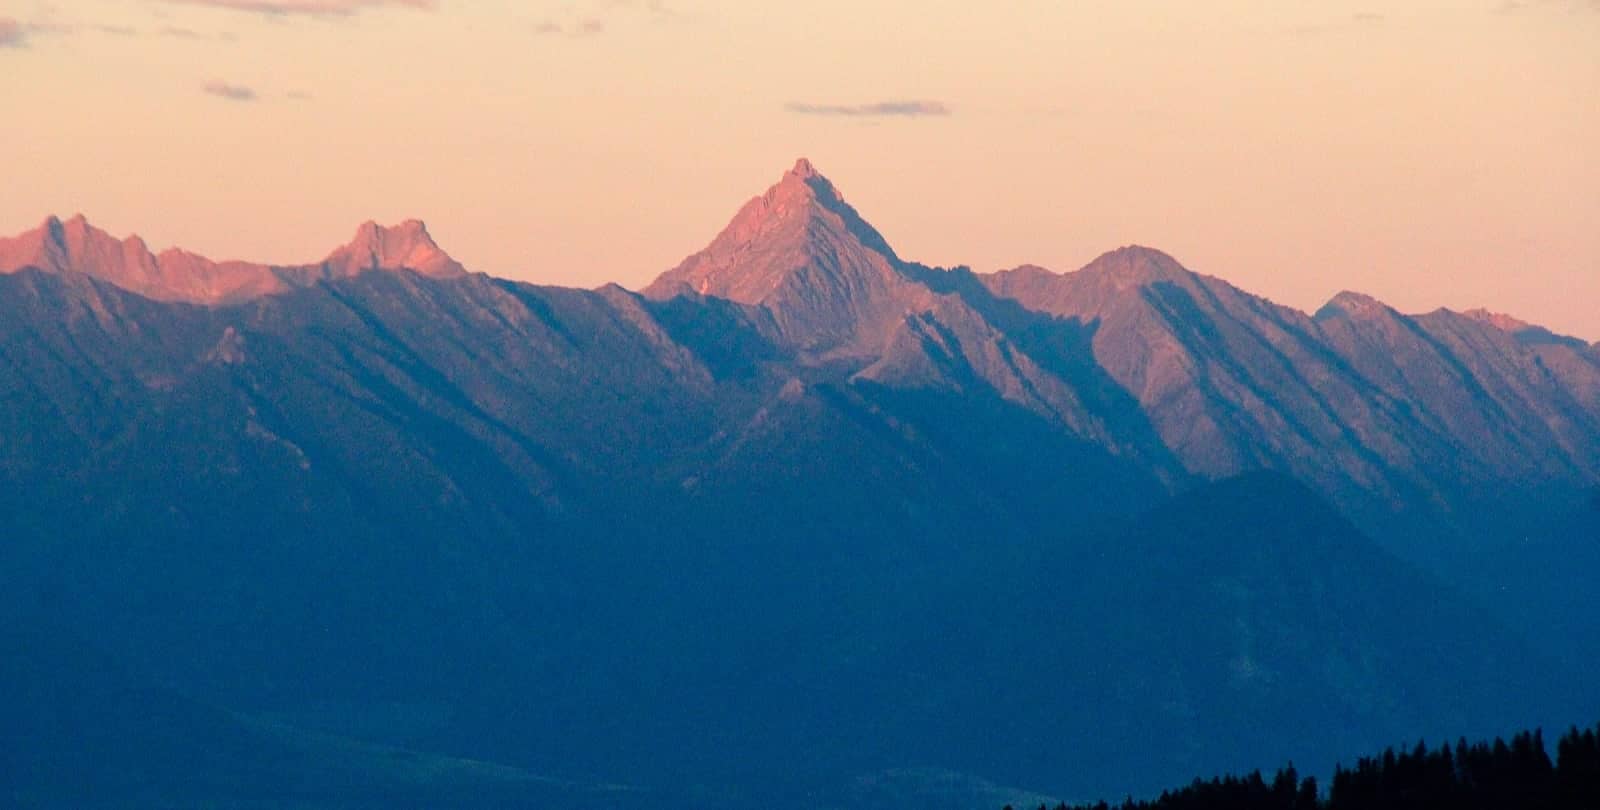 Rugged Fish Peak mountain with morning sunlight